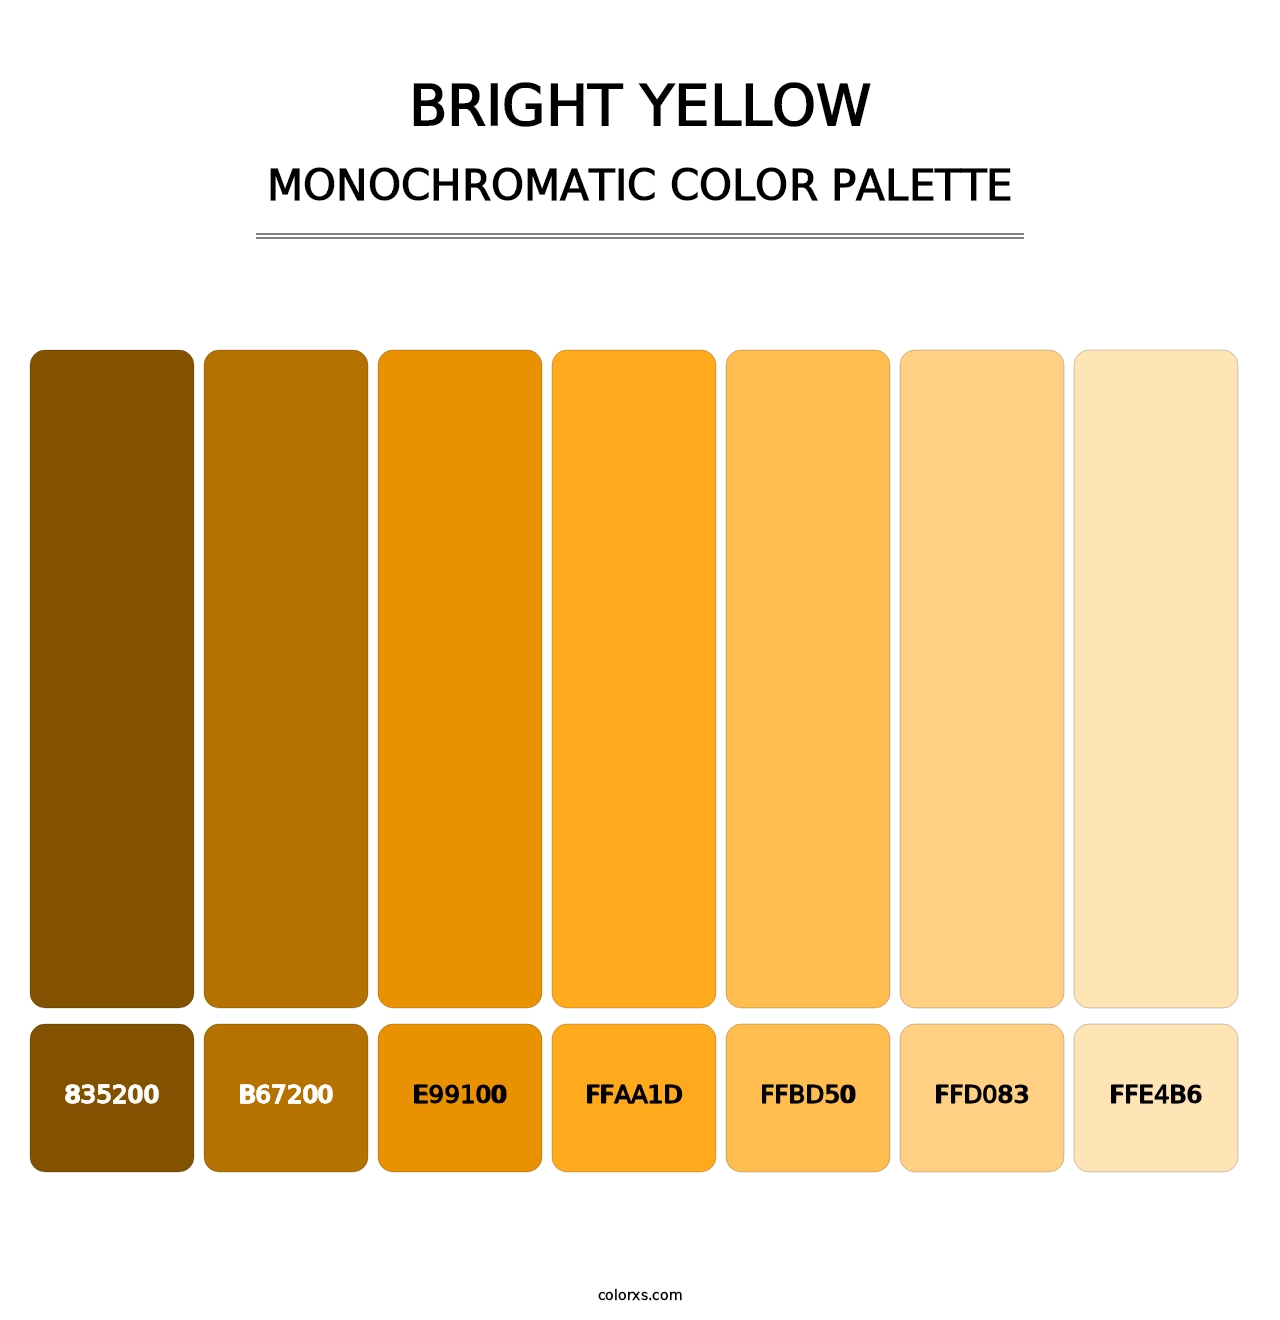 Bright Yellow - Monochromatic Color Palette